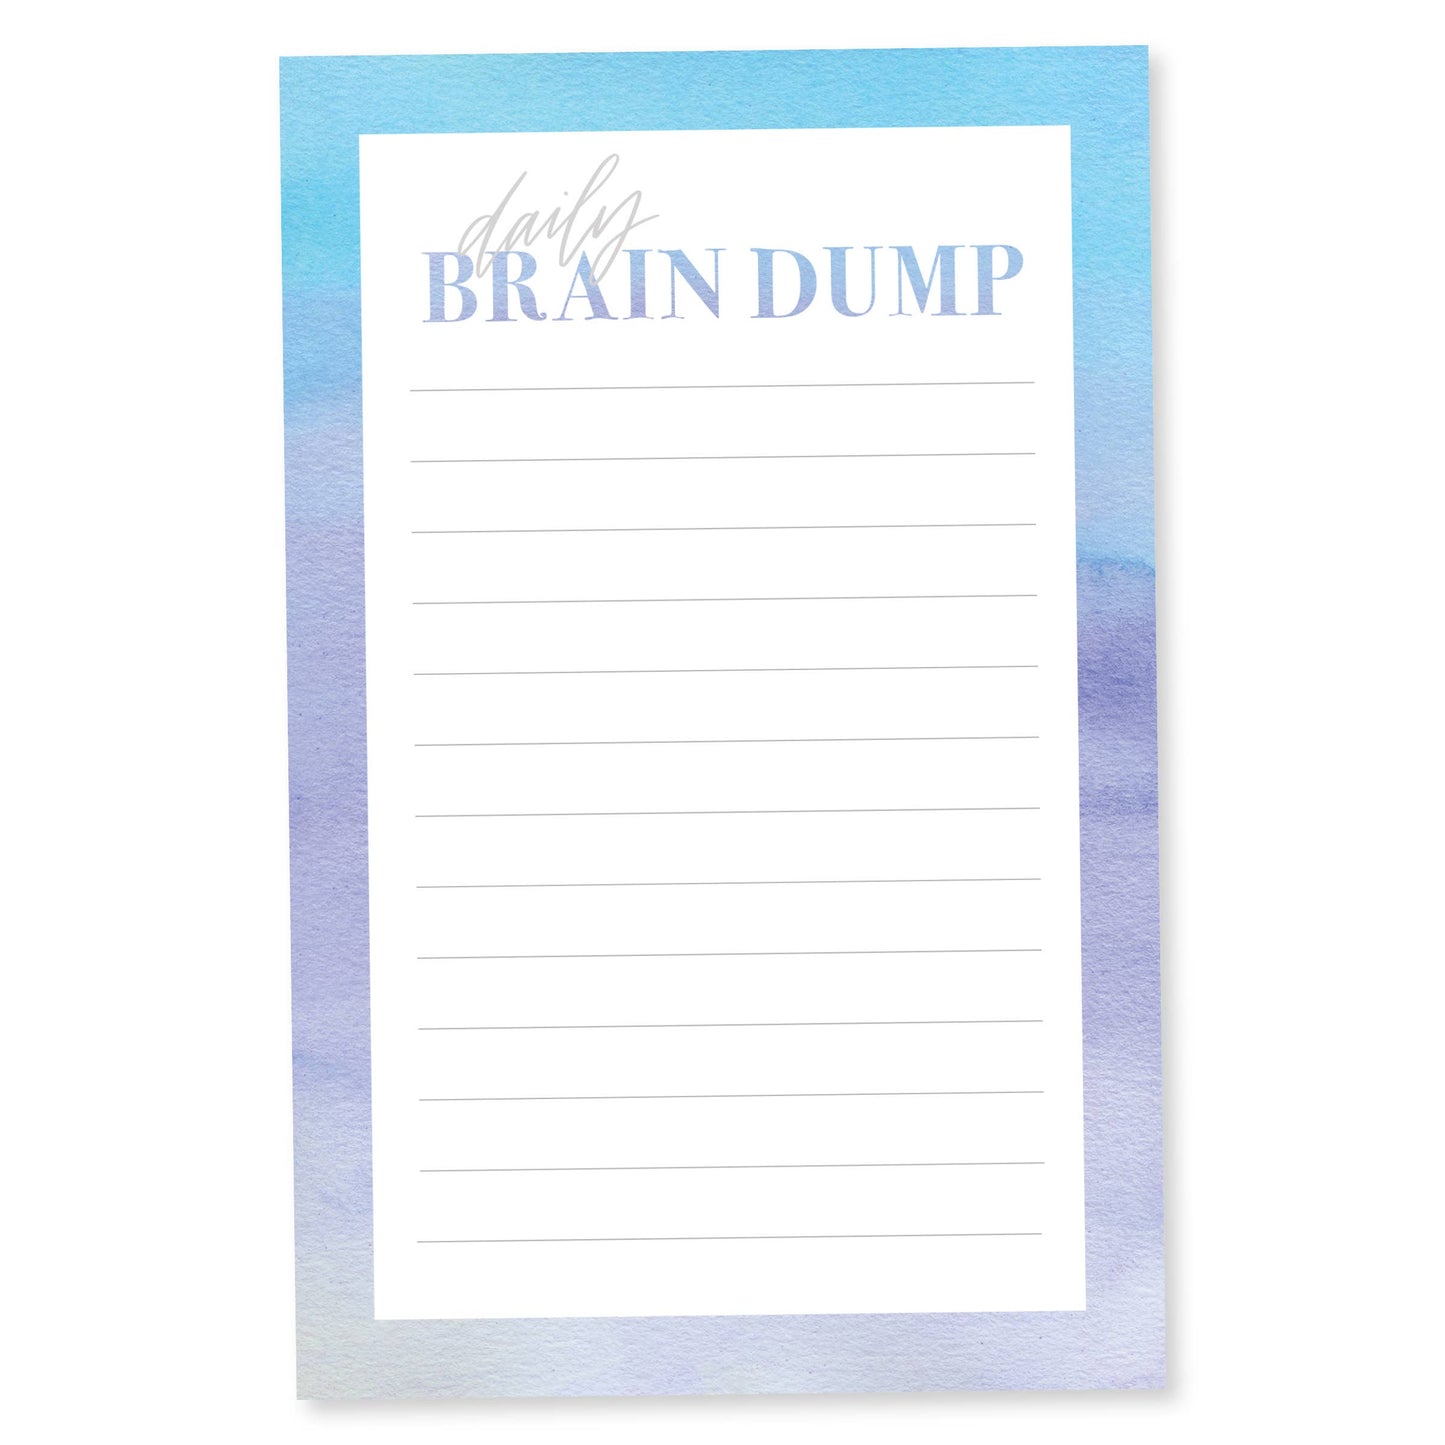 Daily Brain Dump Note Pad - Blue